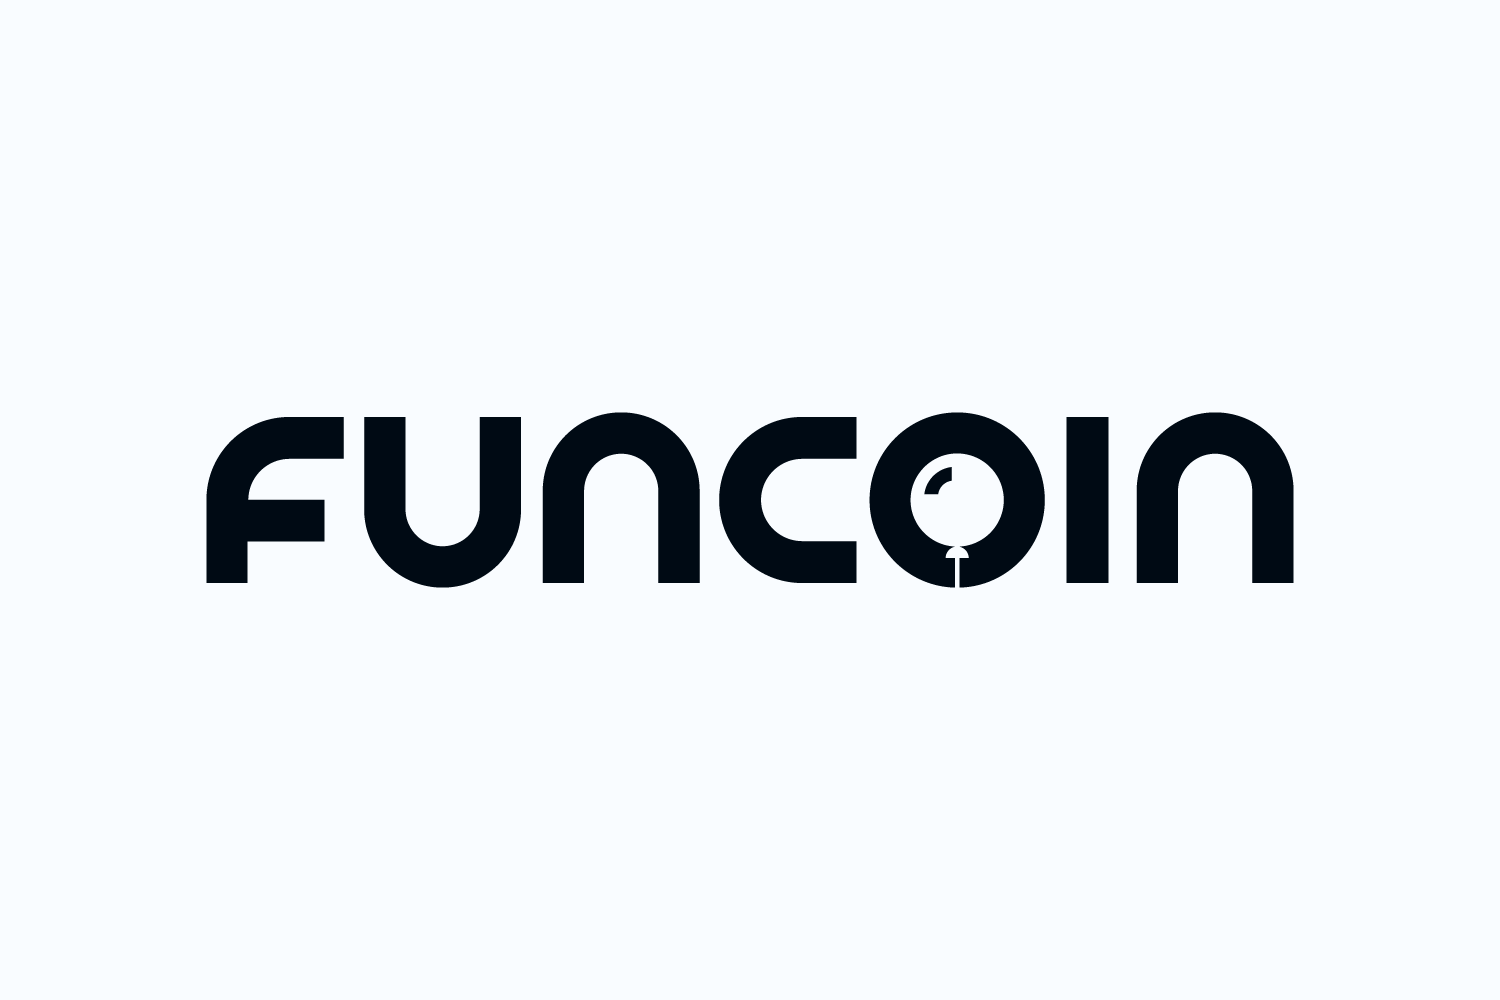 Funcoin wordmark